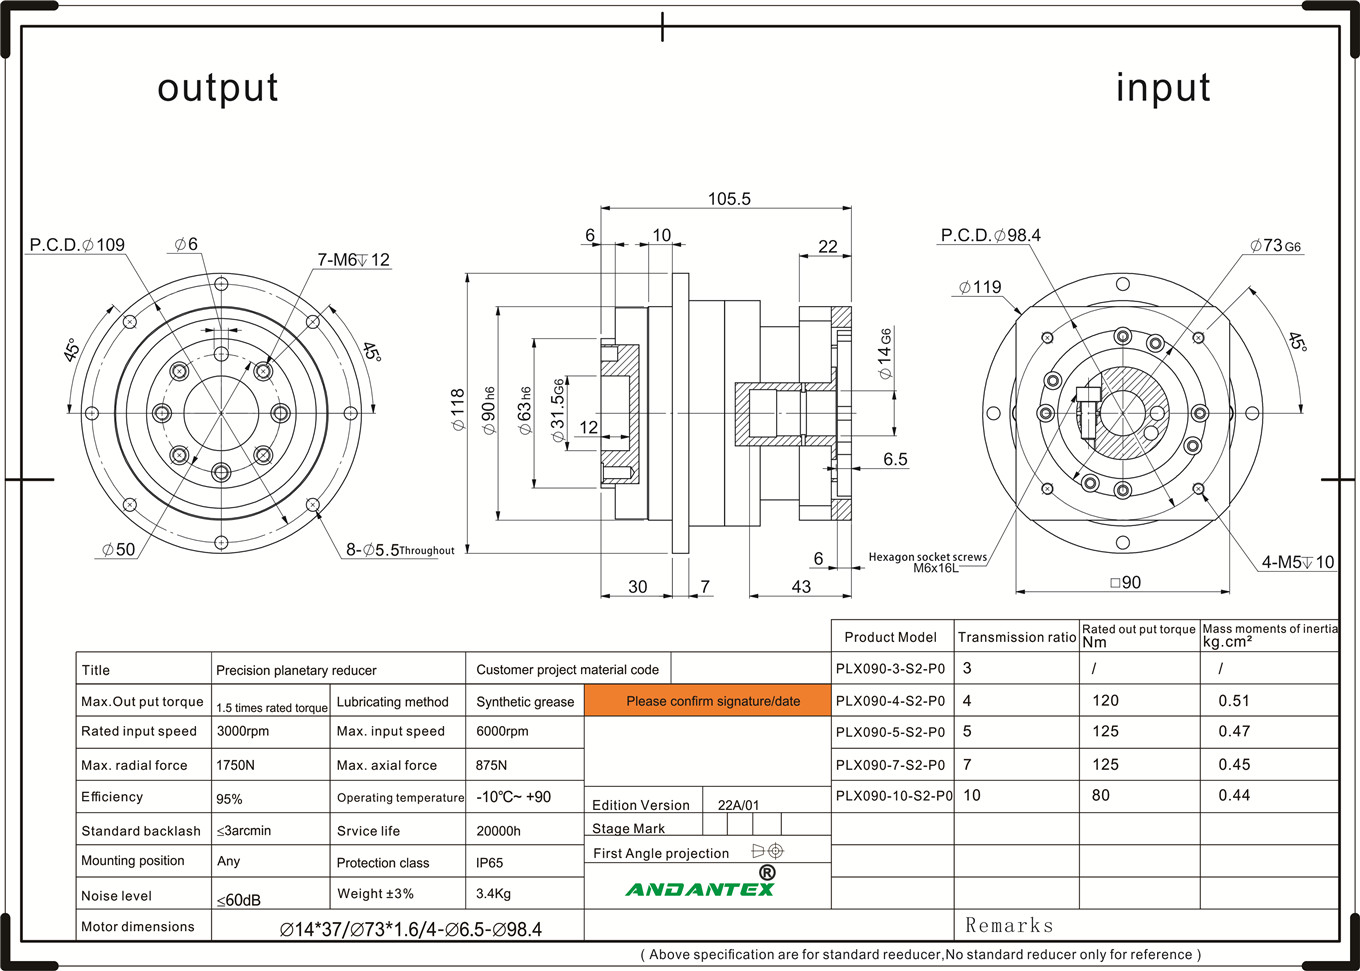 ANDANTEX PLX090-40-S2-P0 CNC ಮೆಷಿನ್ ಟೂಲ್ ಉಪಕರಣ-01 (5) ನಲ್ಲಿ ಹೆಚ್ಚಿನ ನಿಖರವಾದ ಹೆಲಿಕಲ್ ಗೇರ್ ಸರಣಿಯ ಗ್ರಹಗಳ ಗೇರ್‌ಬಾಕ್ಸ್